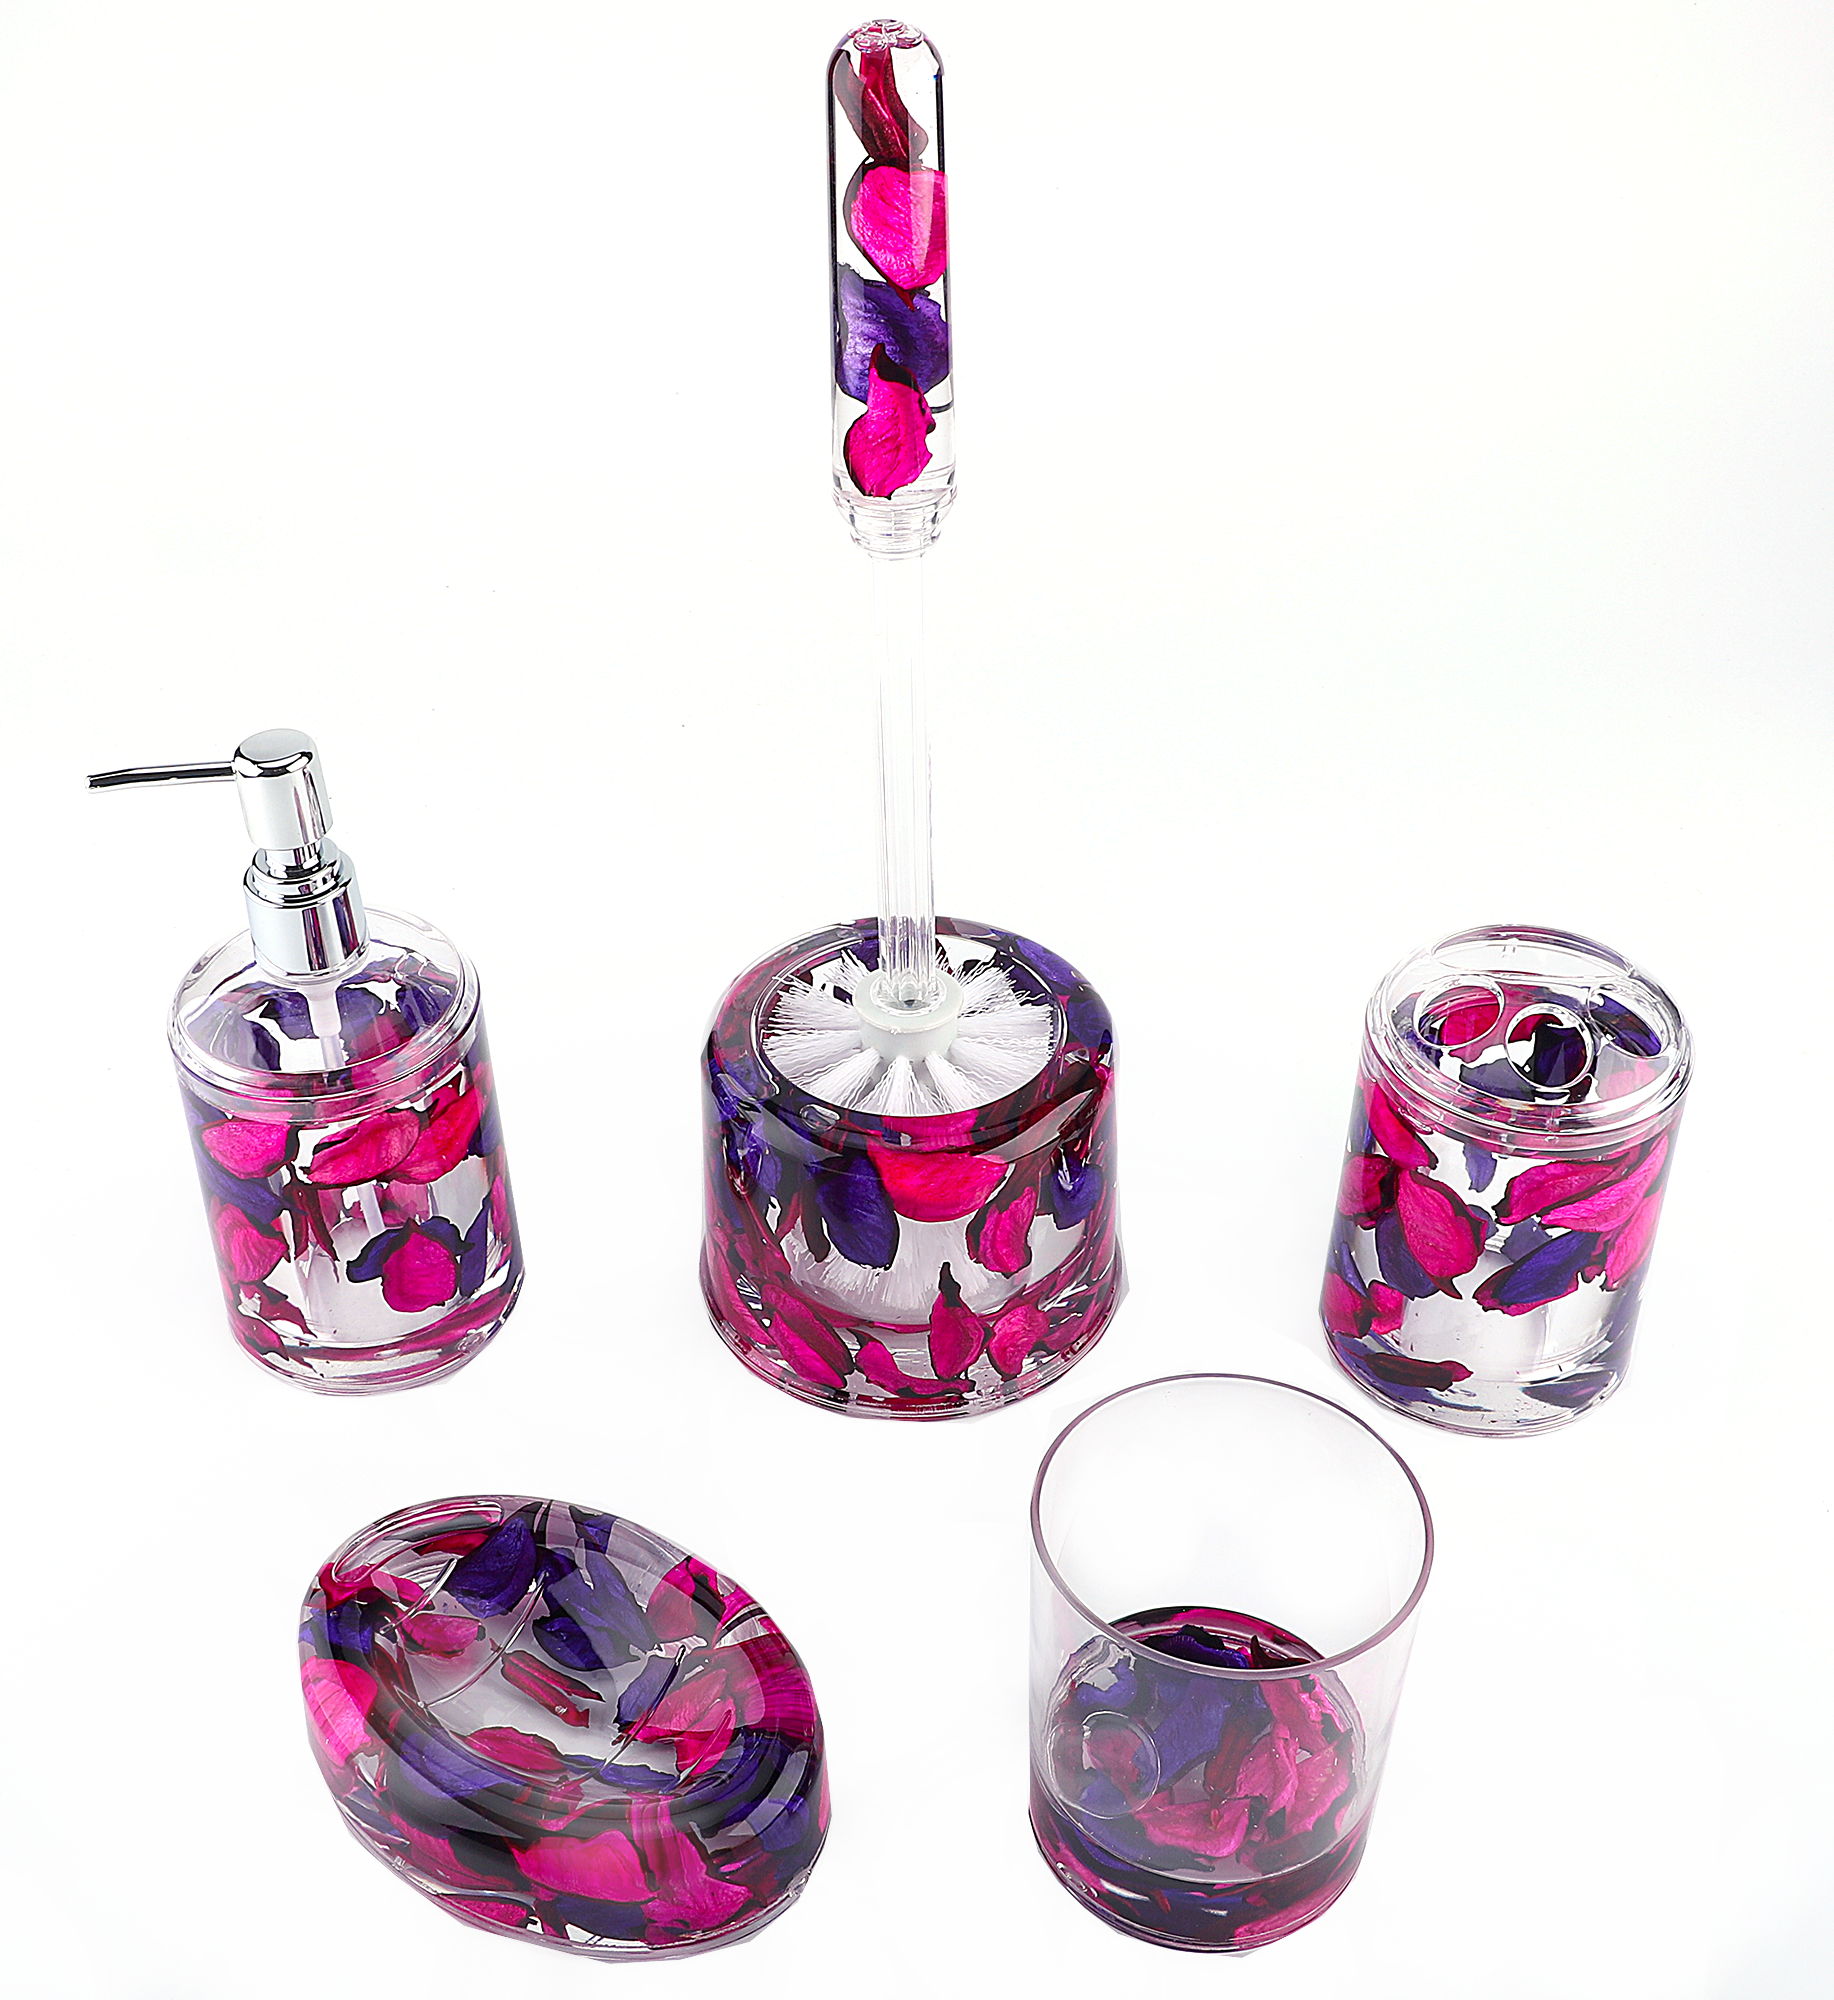 5 Piece Acrylic Liquid 3d Floating Motion Bathroom Vanity Accessory Set Leaf